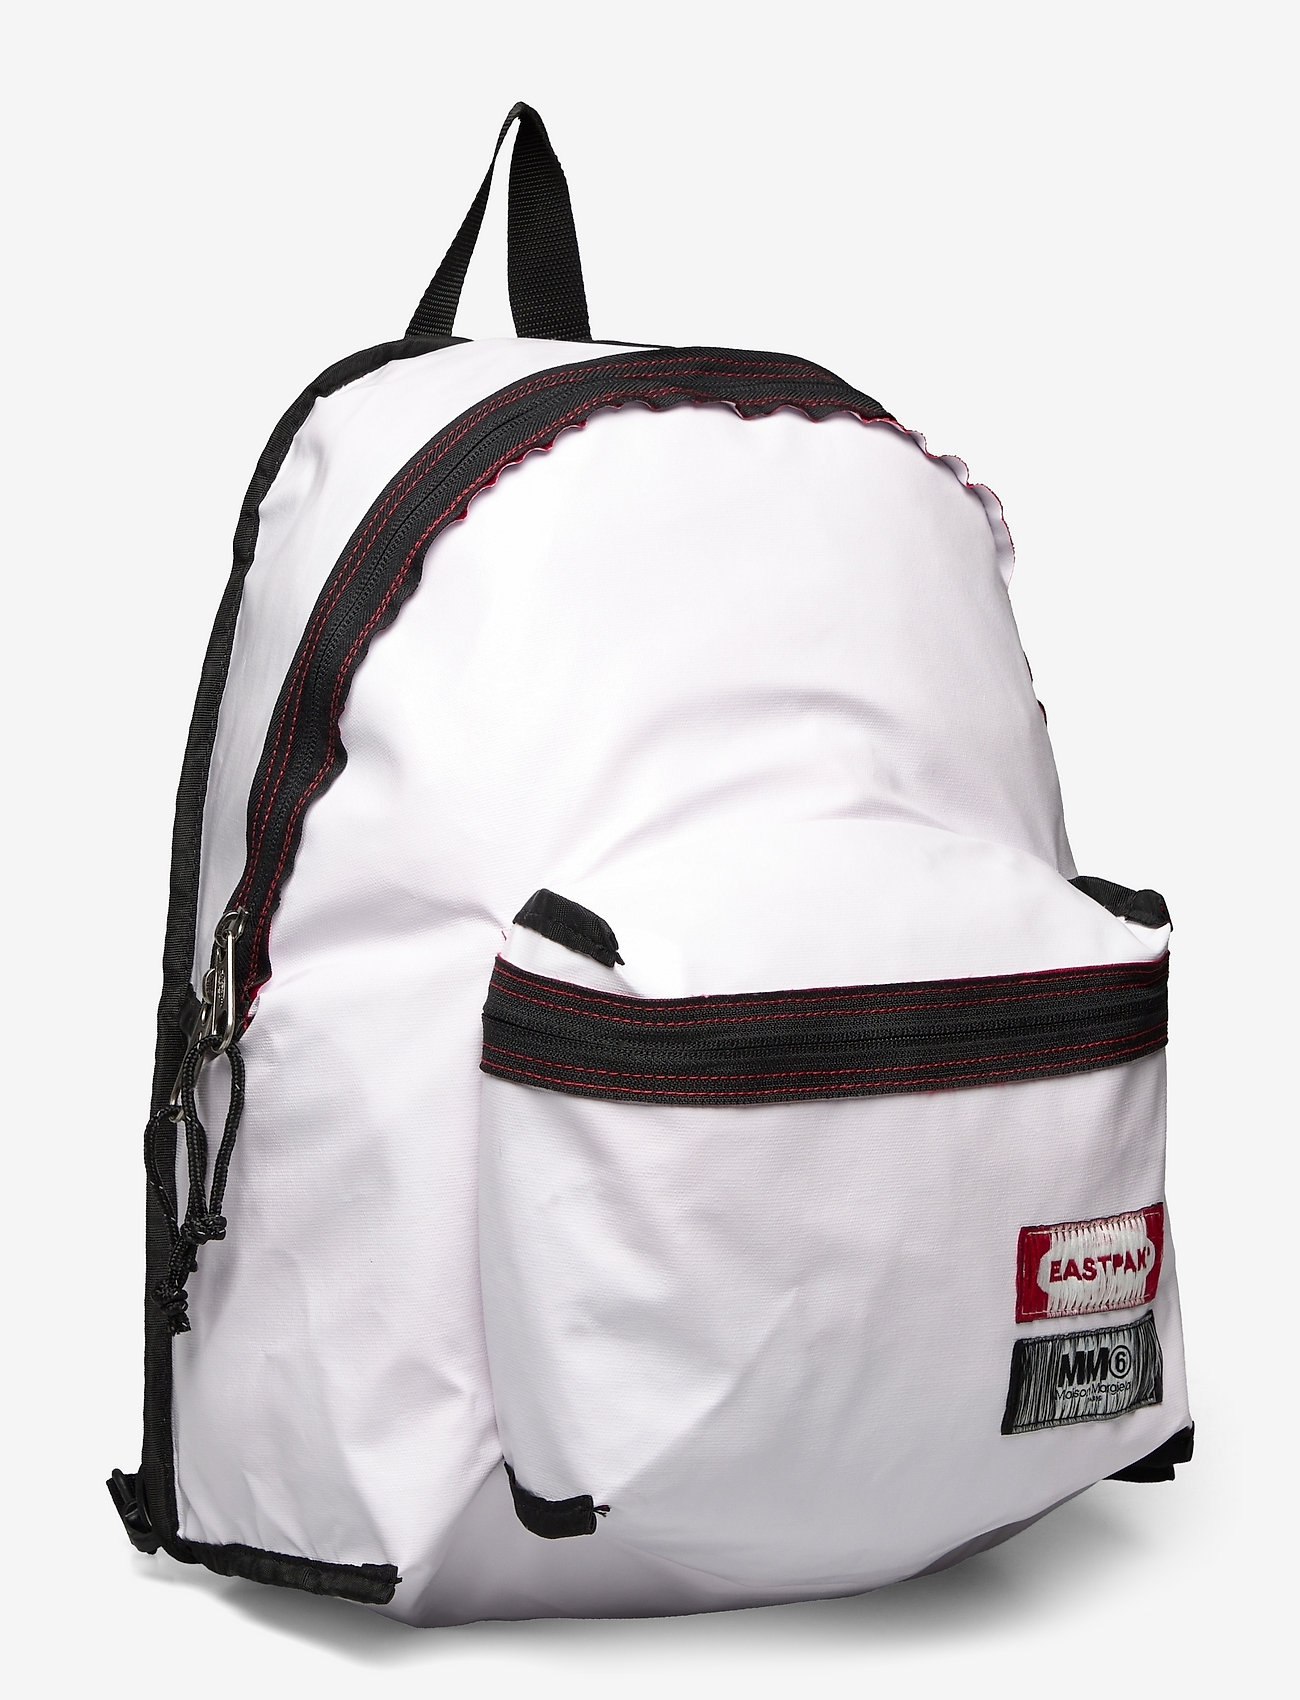 MM6 Maison Margiela - S63WA0022 - backpacks - fiery red - 2